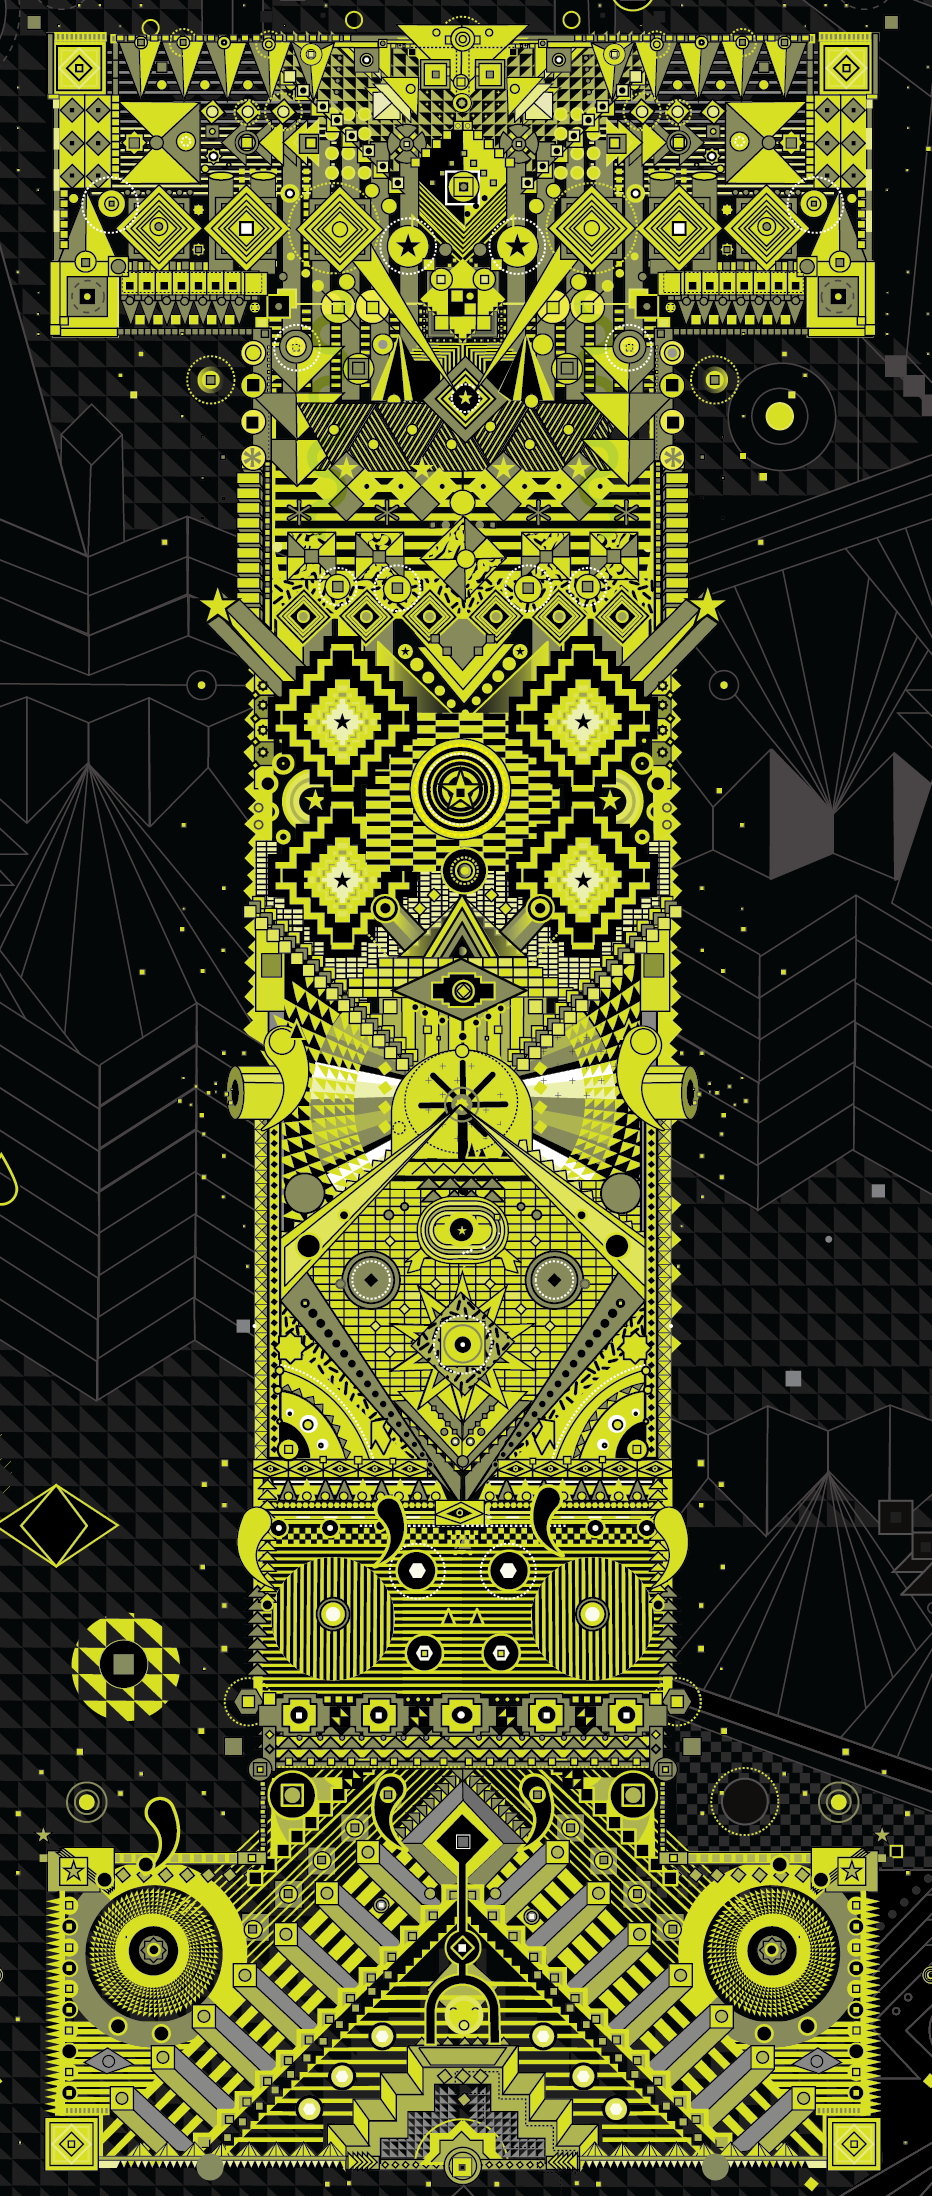 chuck2 converse poster yellow black shoes pub symétrique geometric abstrac allstar2 Chuck Taylor